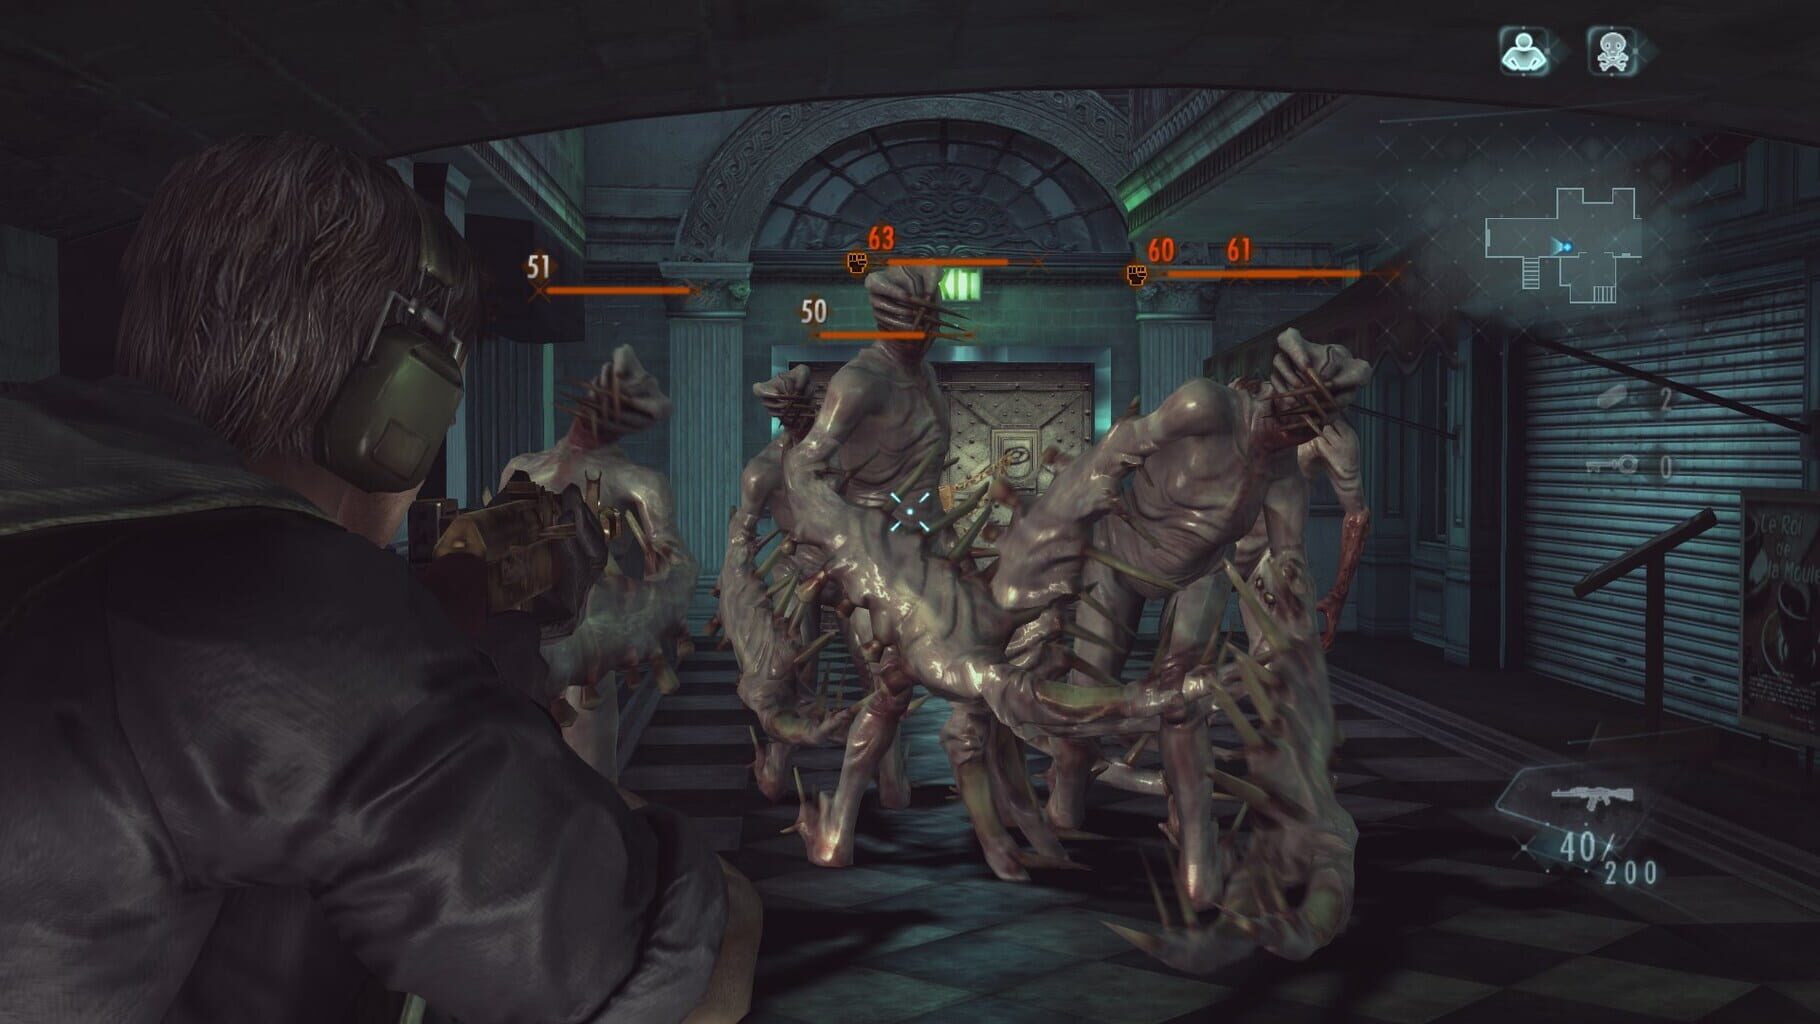 Captura de pantalla - Resident Evil: Revelations